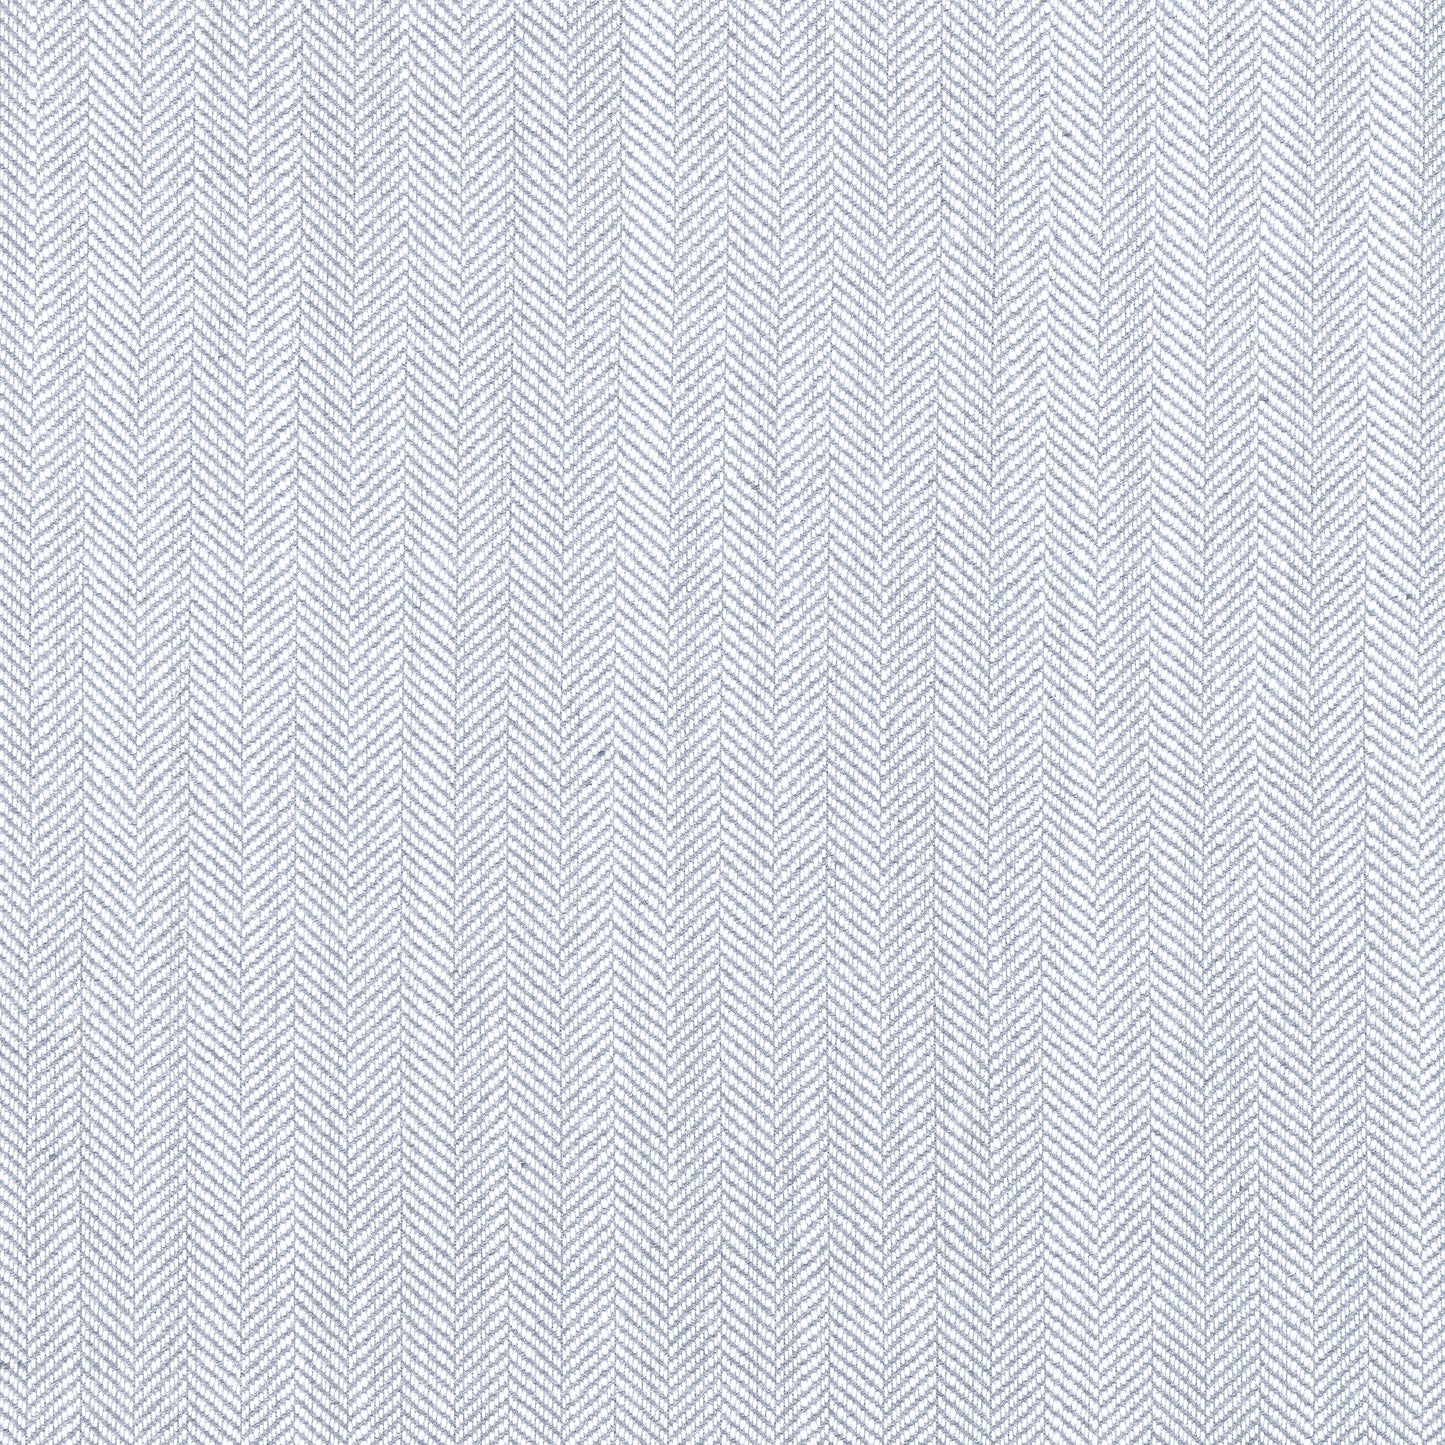 Purchase Thibaut Fabric Item# W8564 pattern name Savile color Horizon